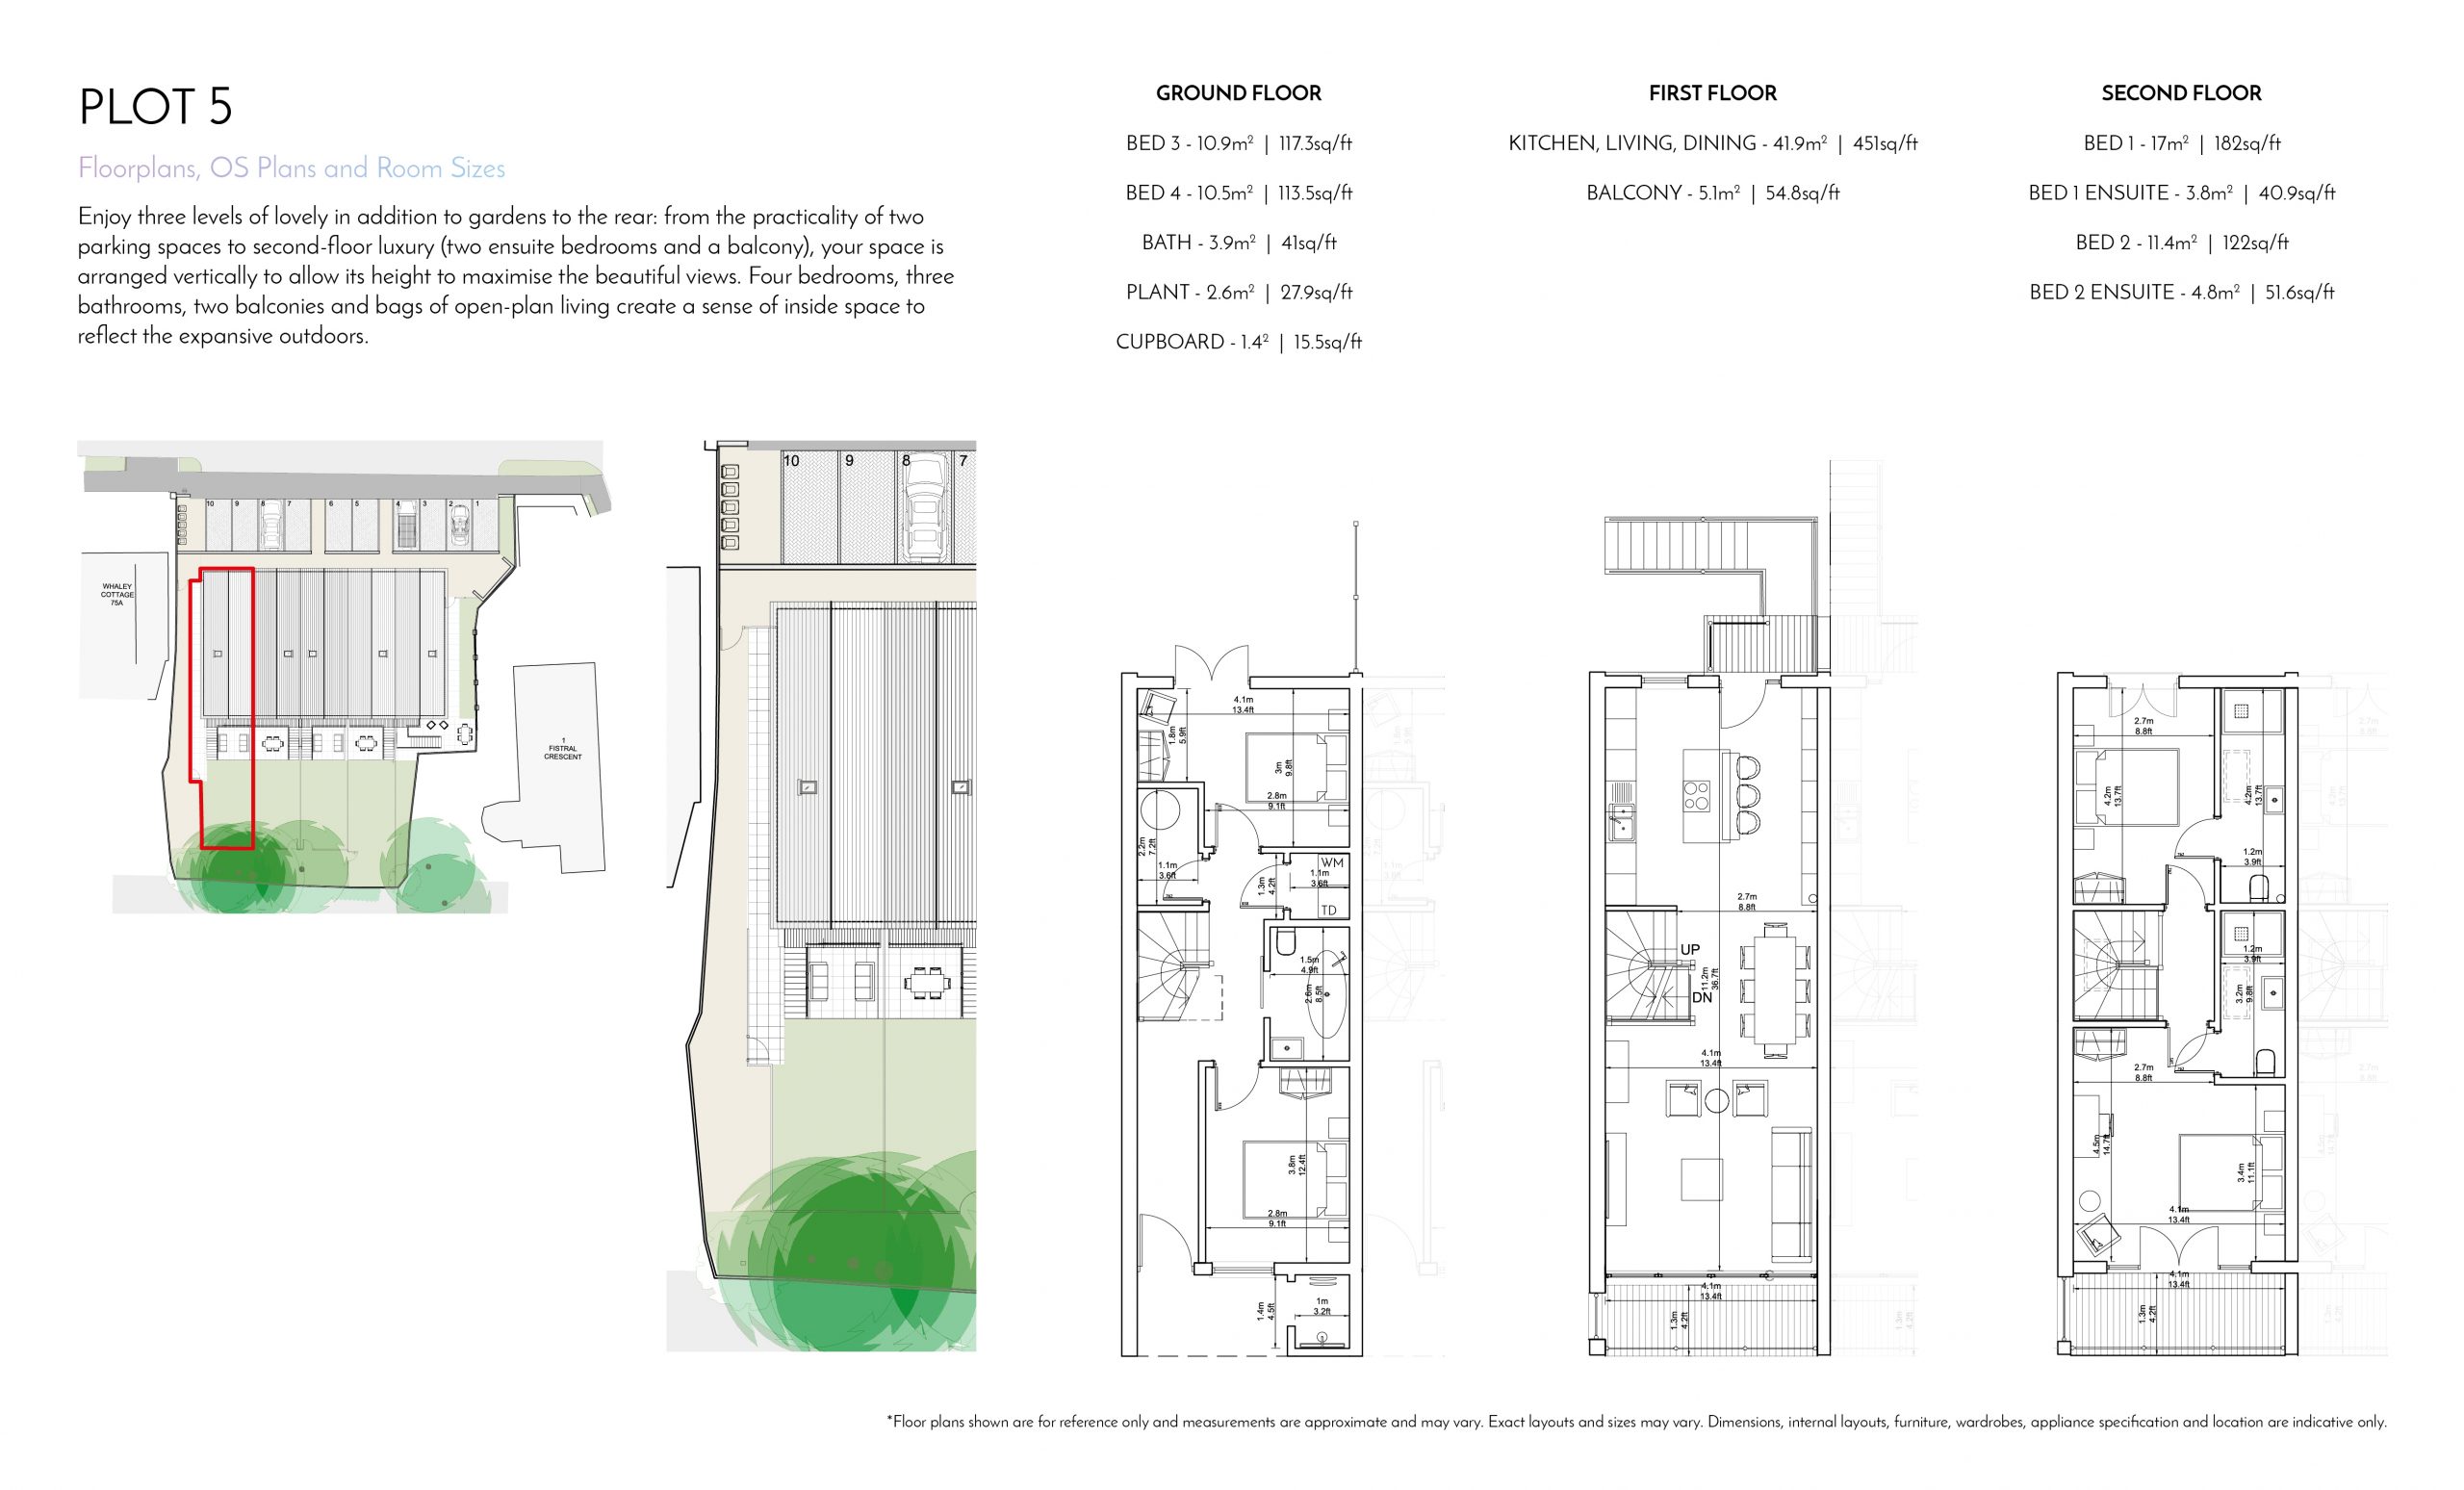 Stephens and Stephens Developers Breakwater Pentire Newquay Cornwall Floorplans Plot 5